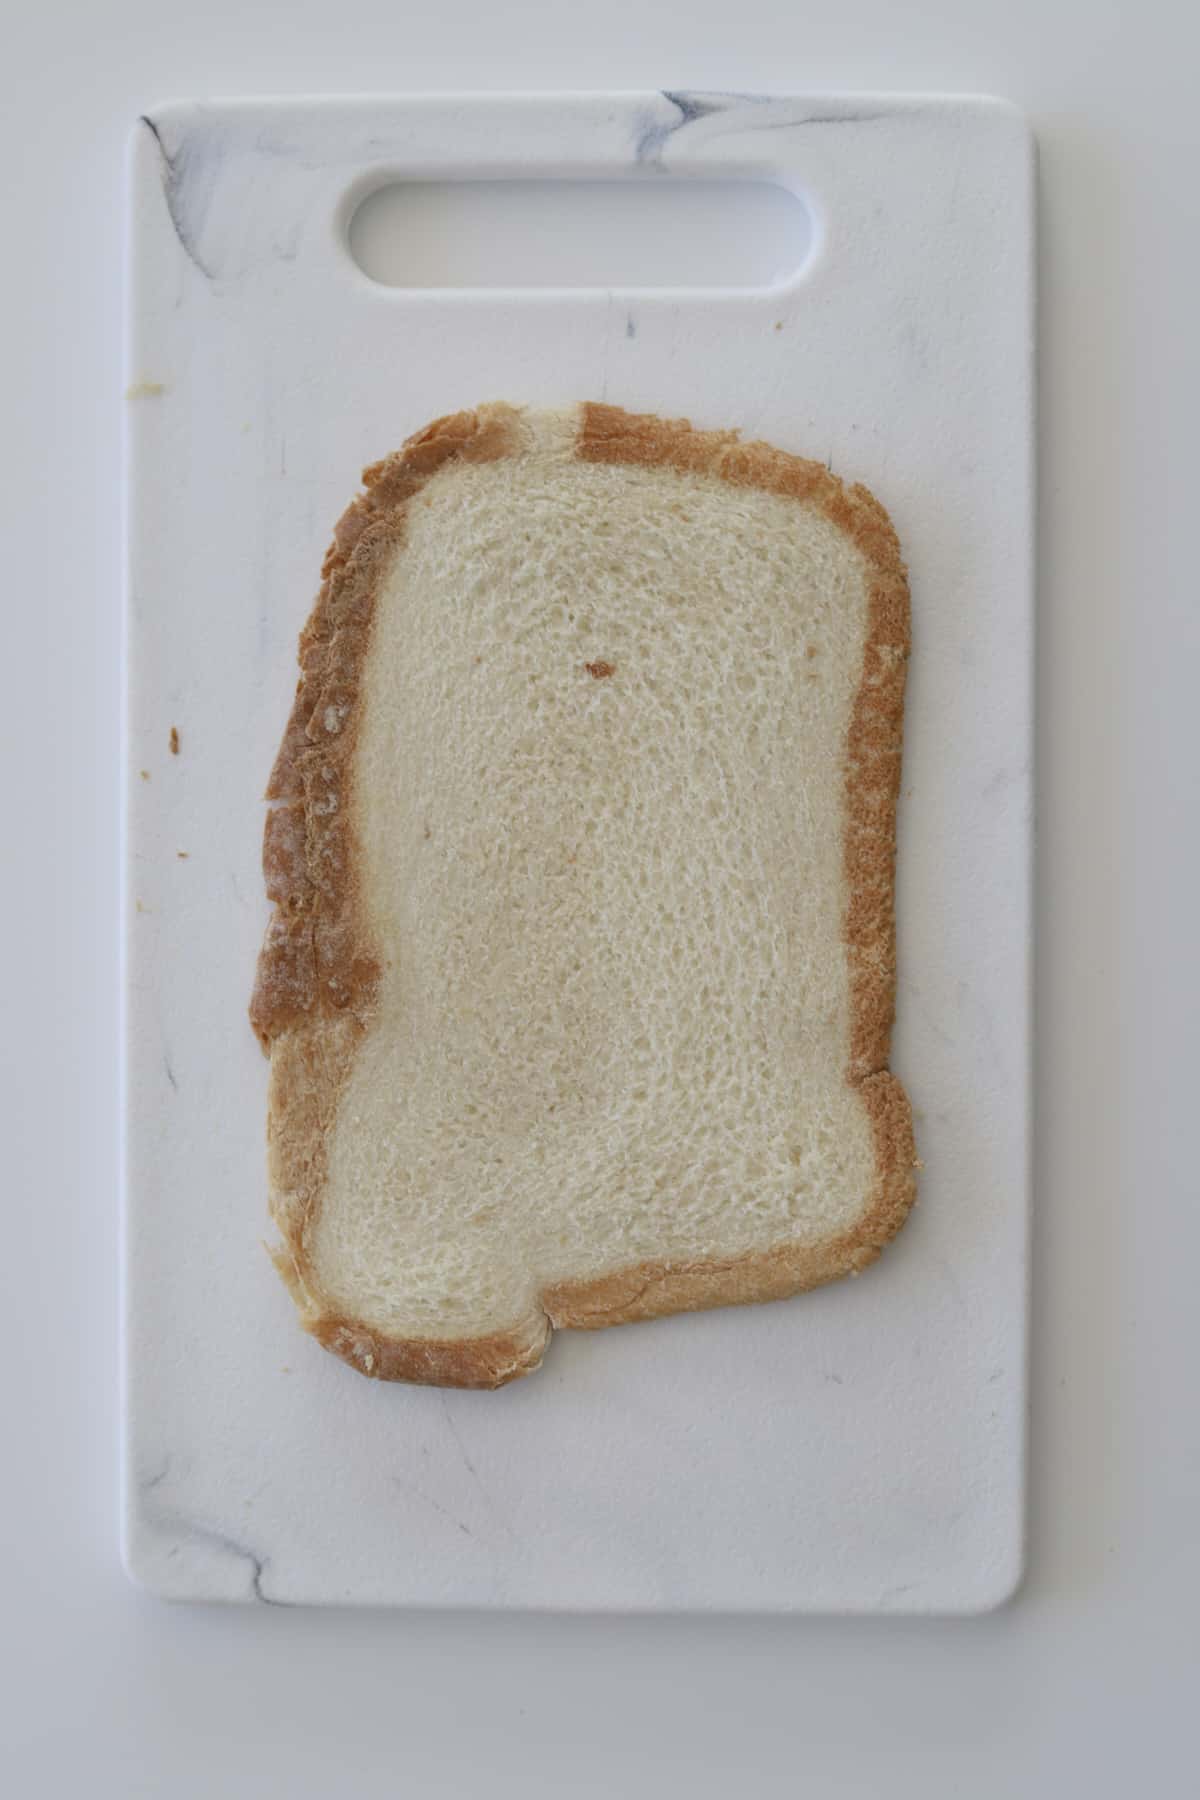 a flattened piece of bread